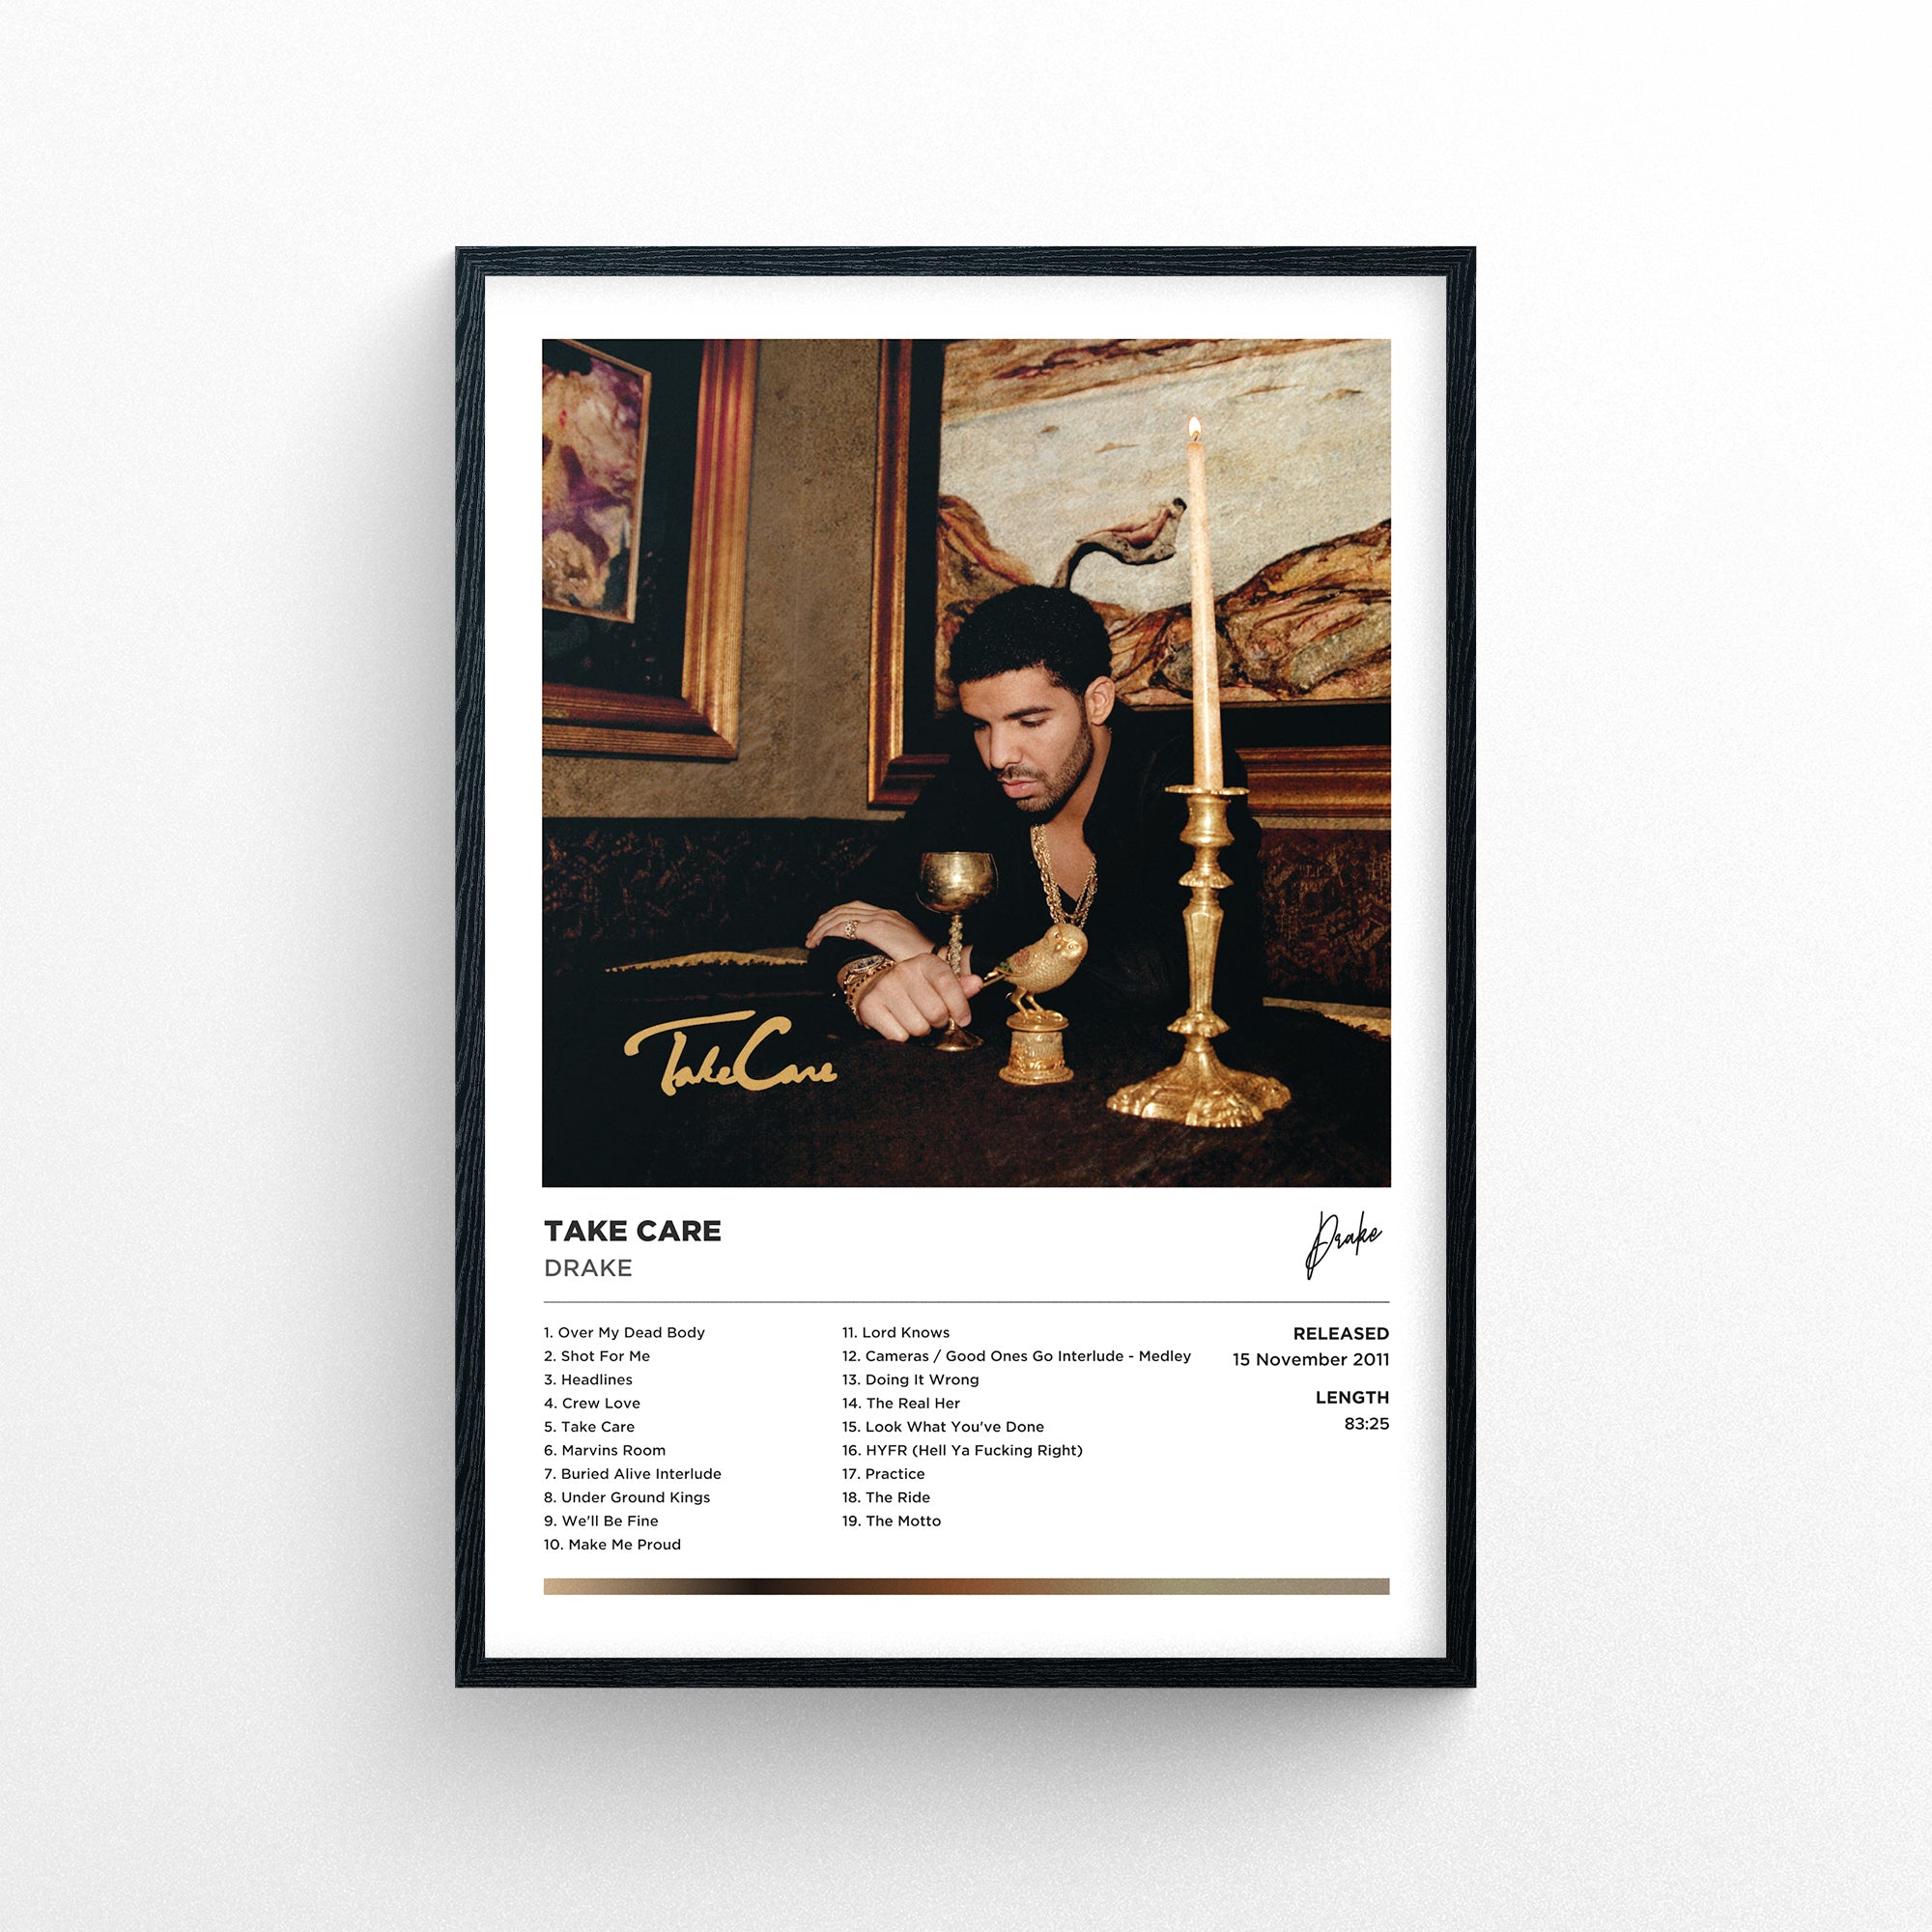 Drake - Take Care Framed Poster Print | Polaroid Style | Album Cover A